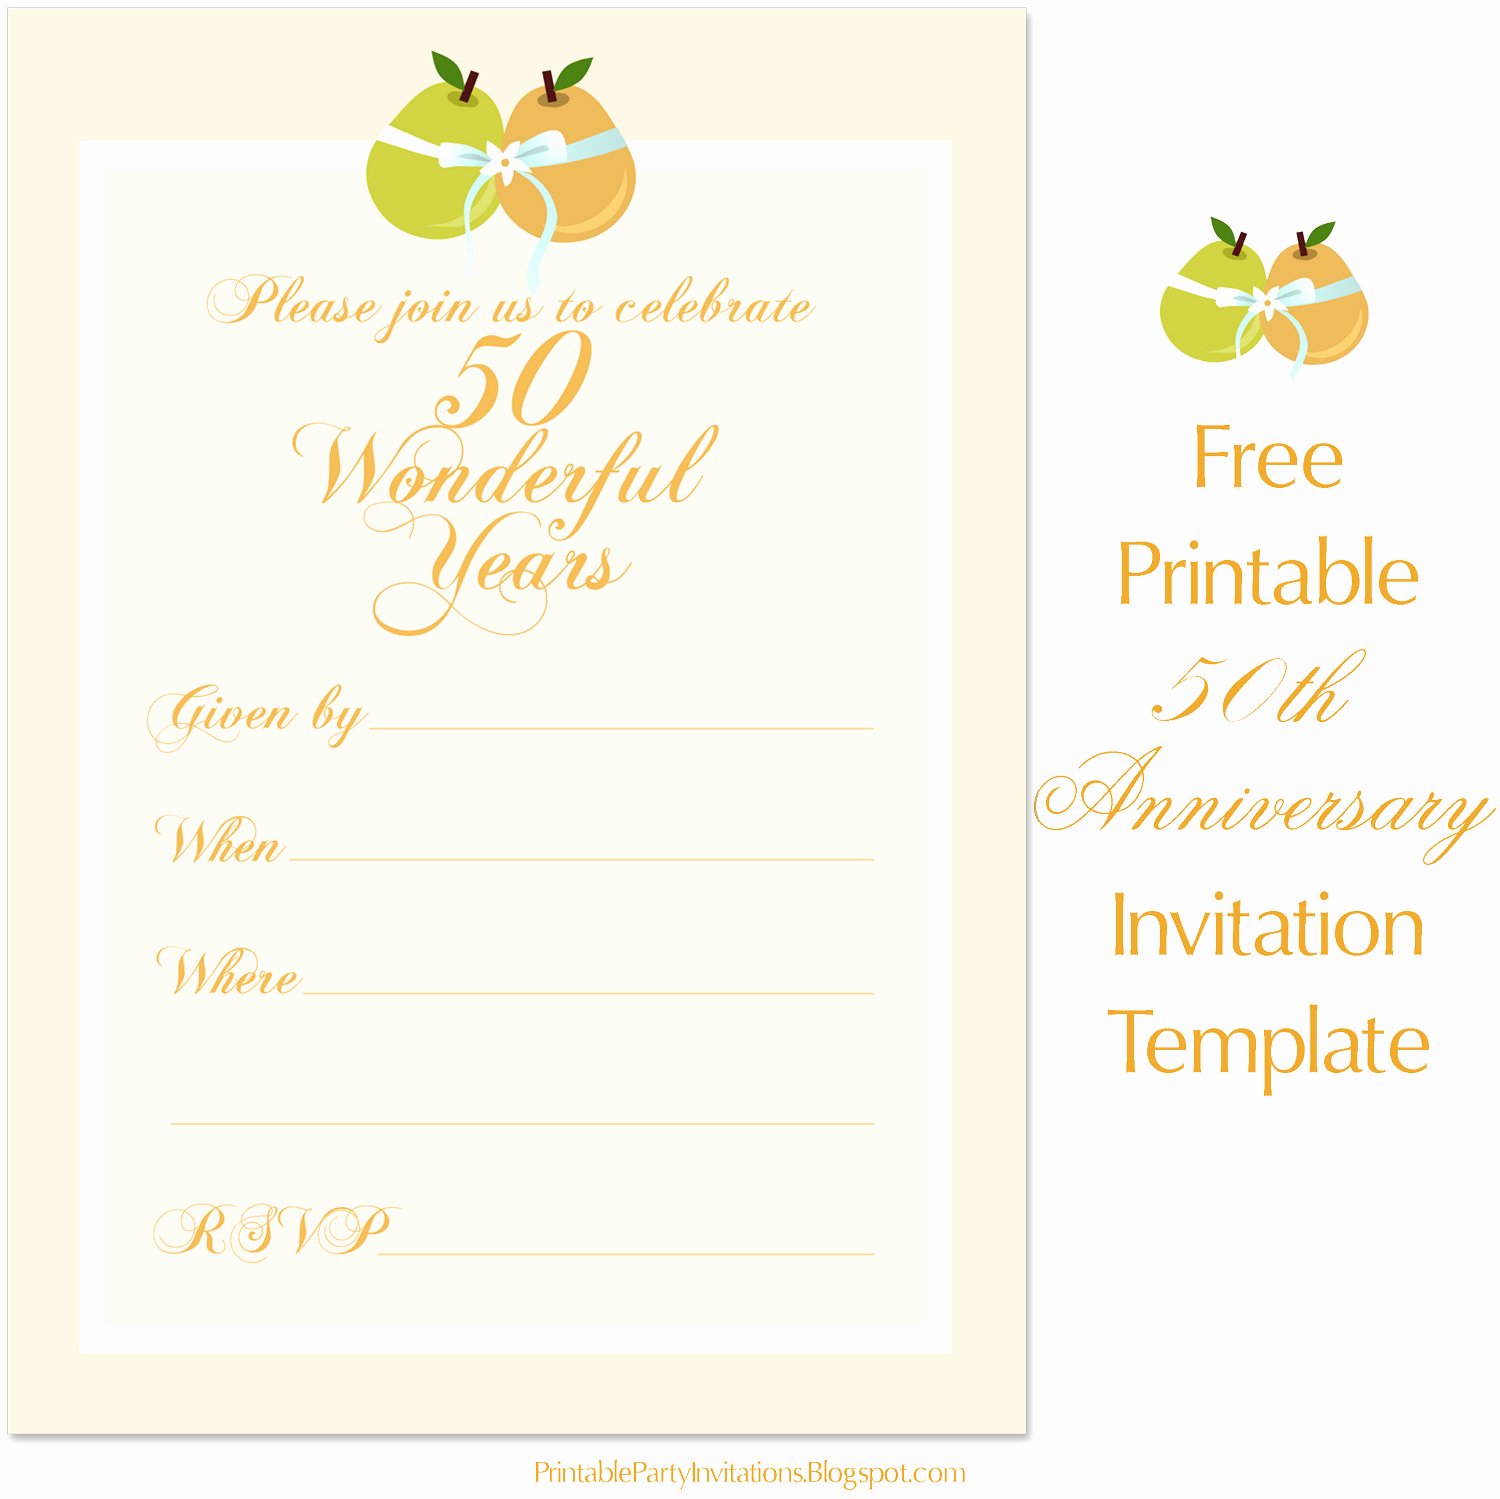 Wedding Anniversary Invite Template New Free 50th Wedding Anniversary Invitation Template